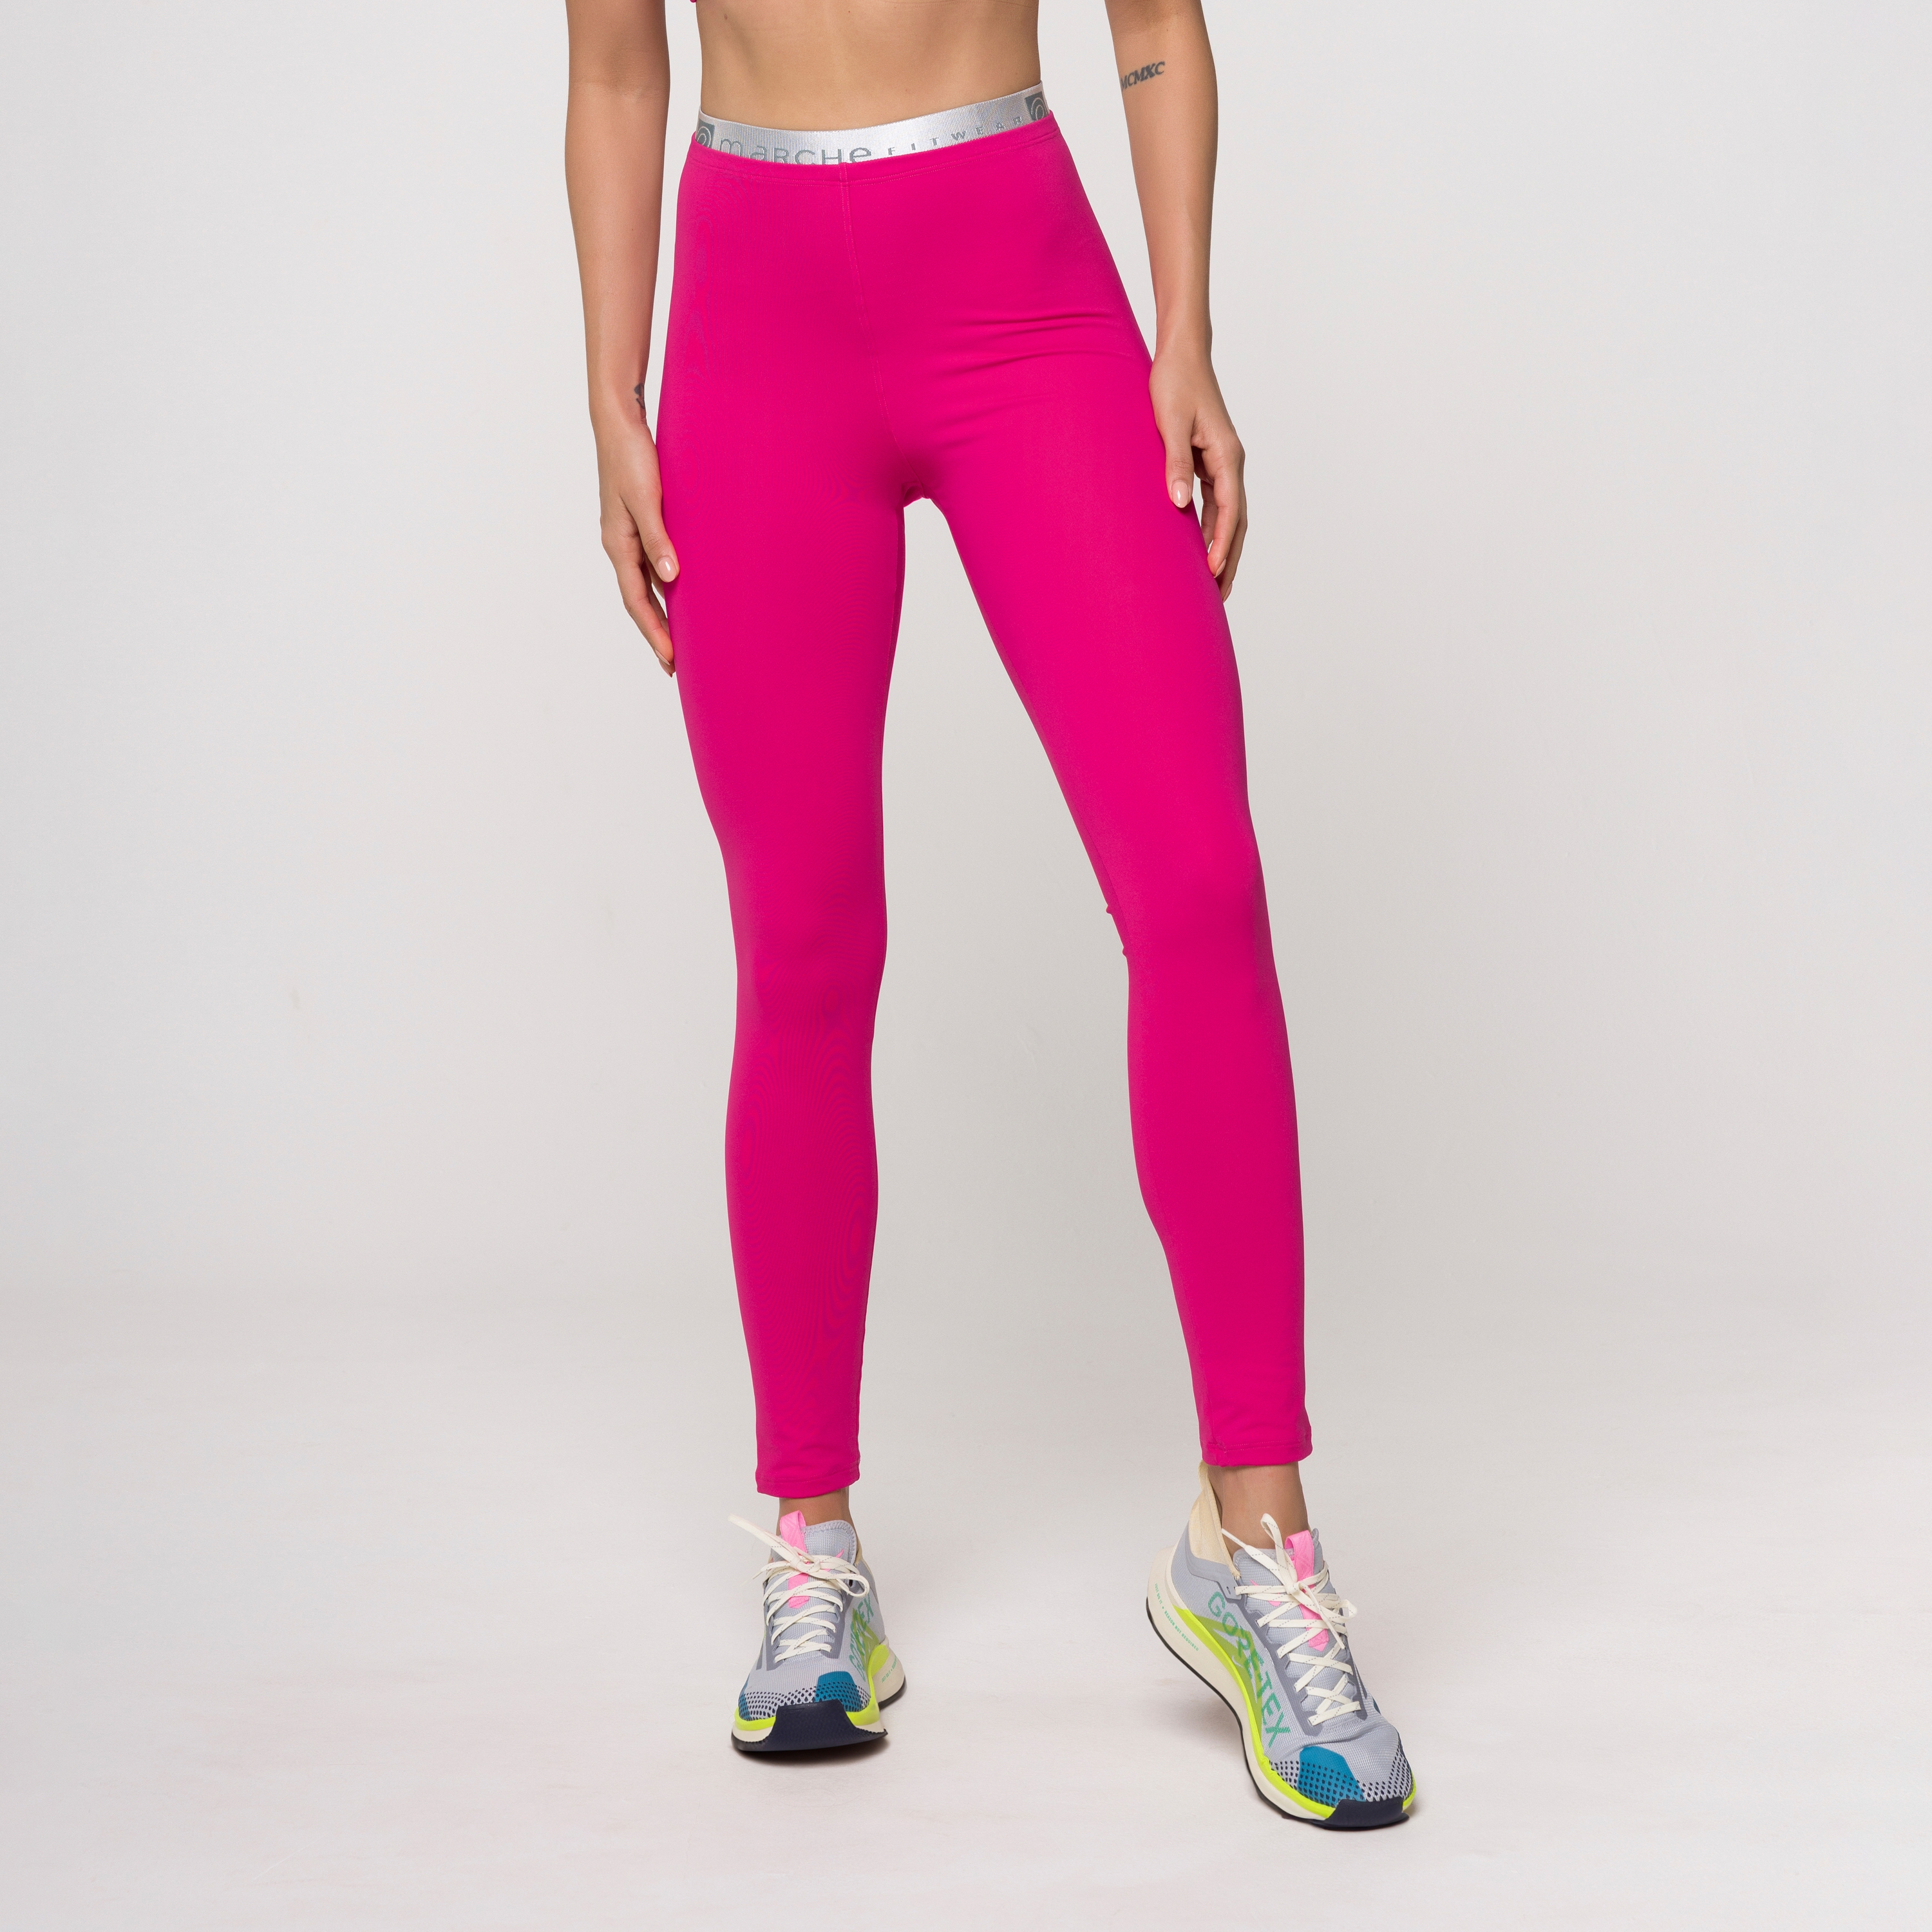 https://www.marchefitwear.com.br/app-marche/assets/images/dinamica/produto/77/cor_0/mc005re-calca-legging-rosa-enjoy-com-elastico-personalizado-na-cintura-300623-a584be.jpg